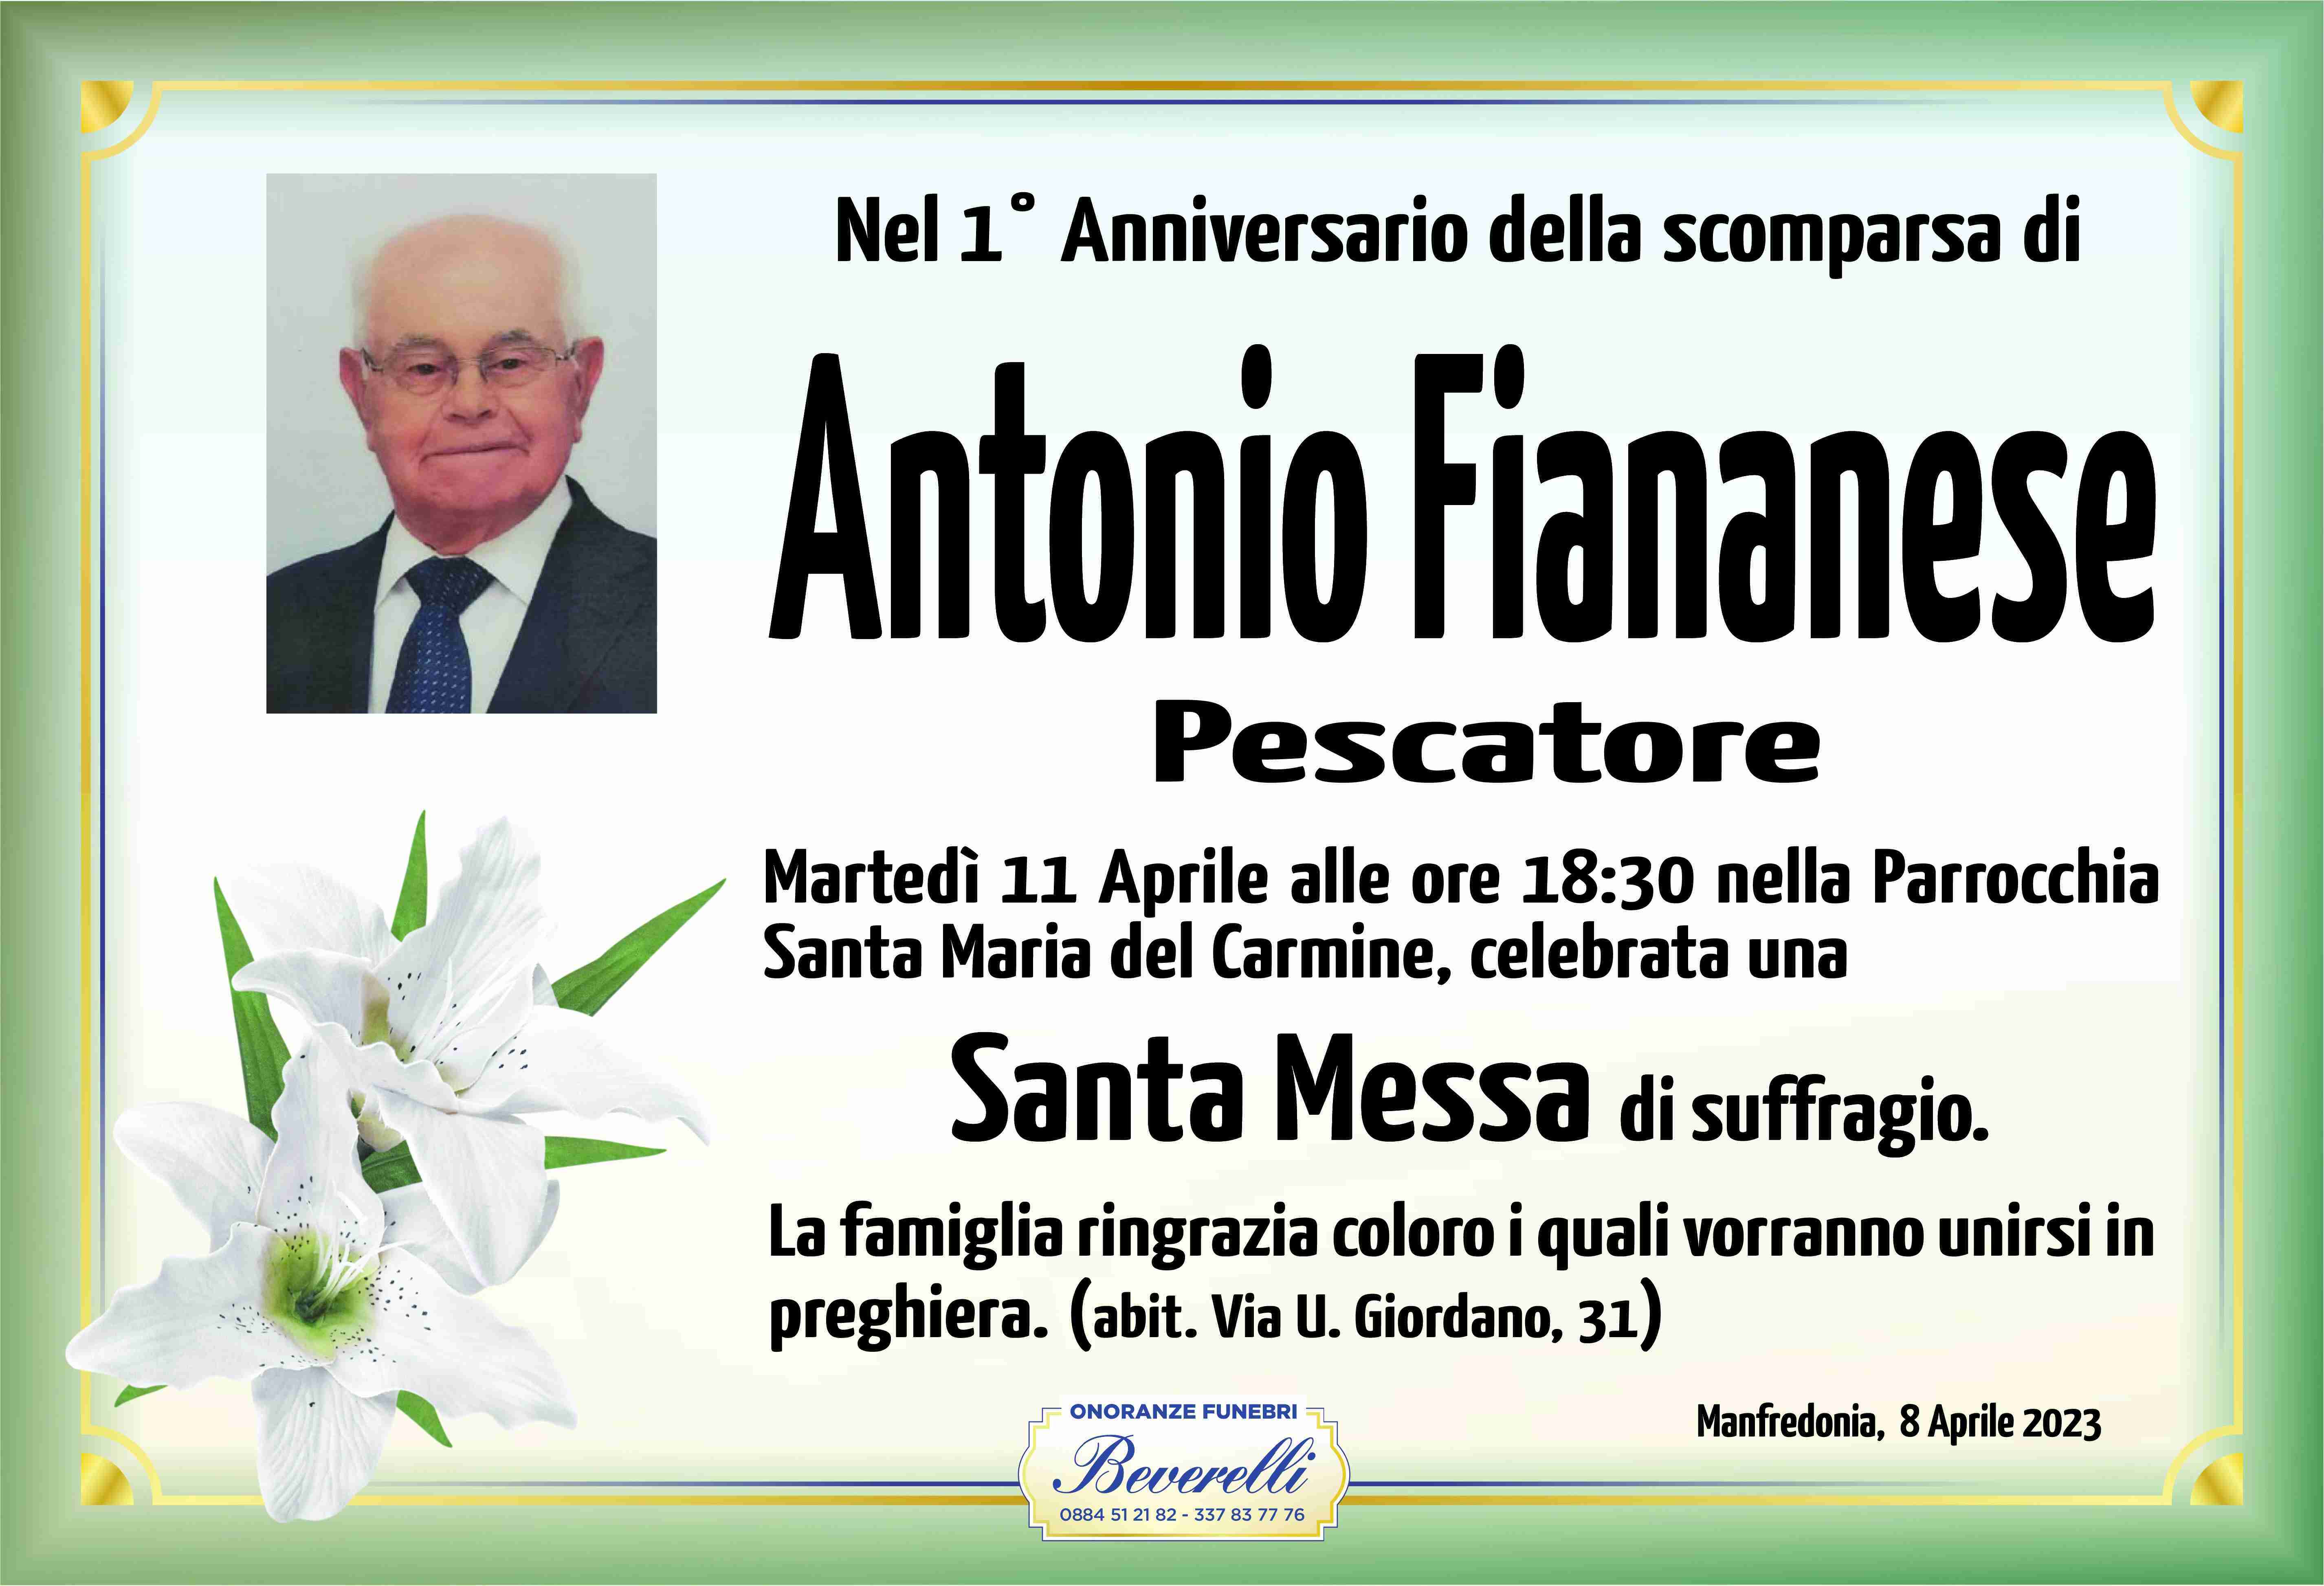 Antonio Fiananese